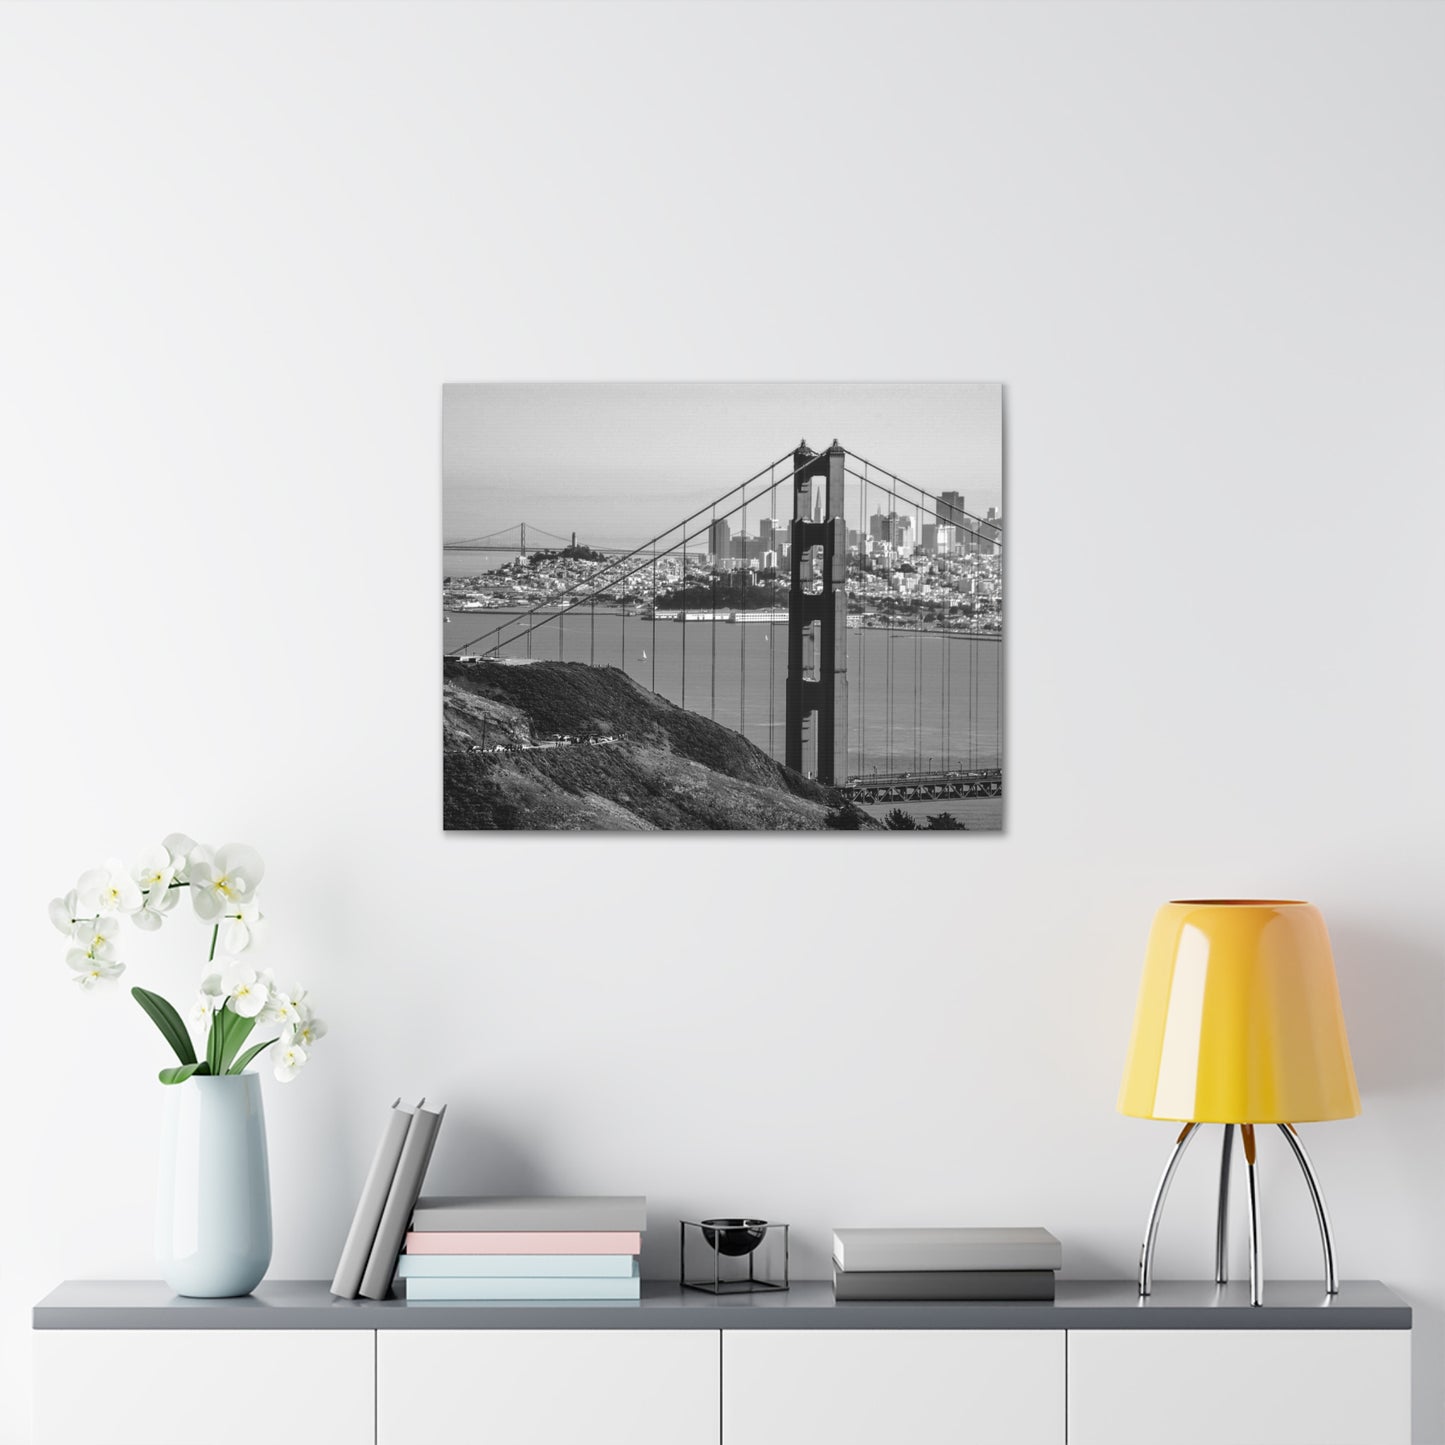 Canvas Print Of Golden Gate Bridge & Skyline In San Francisco For Wall Art